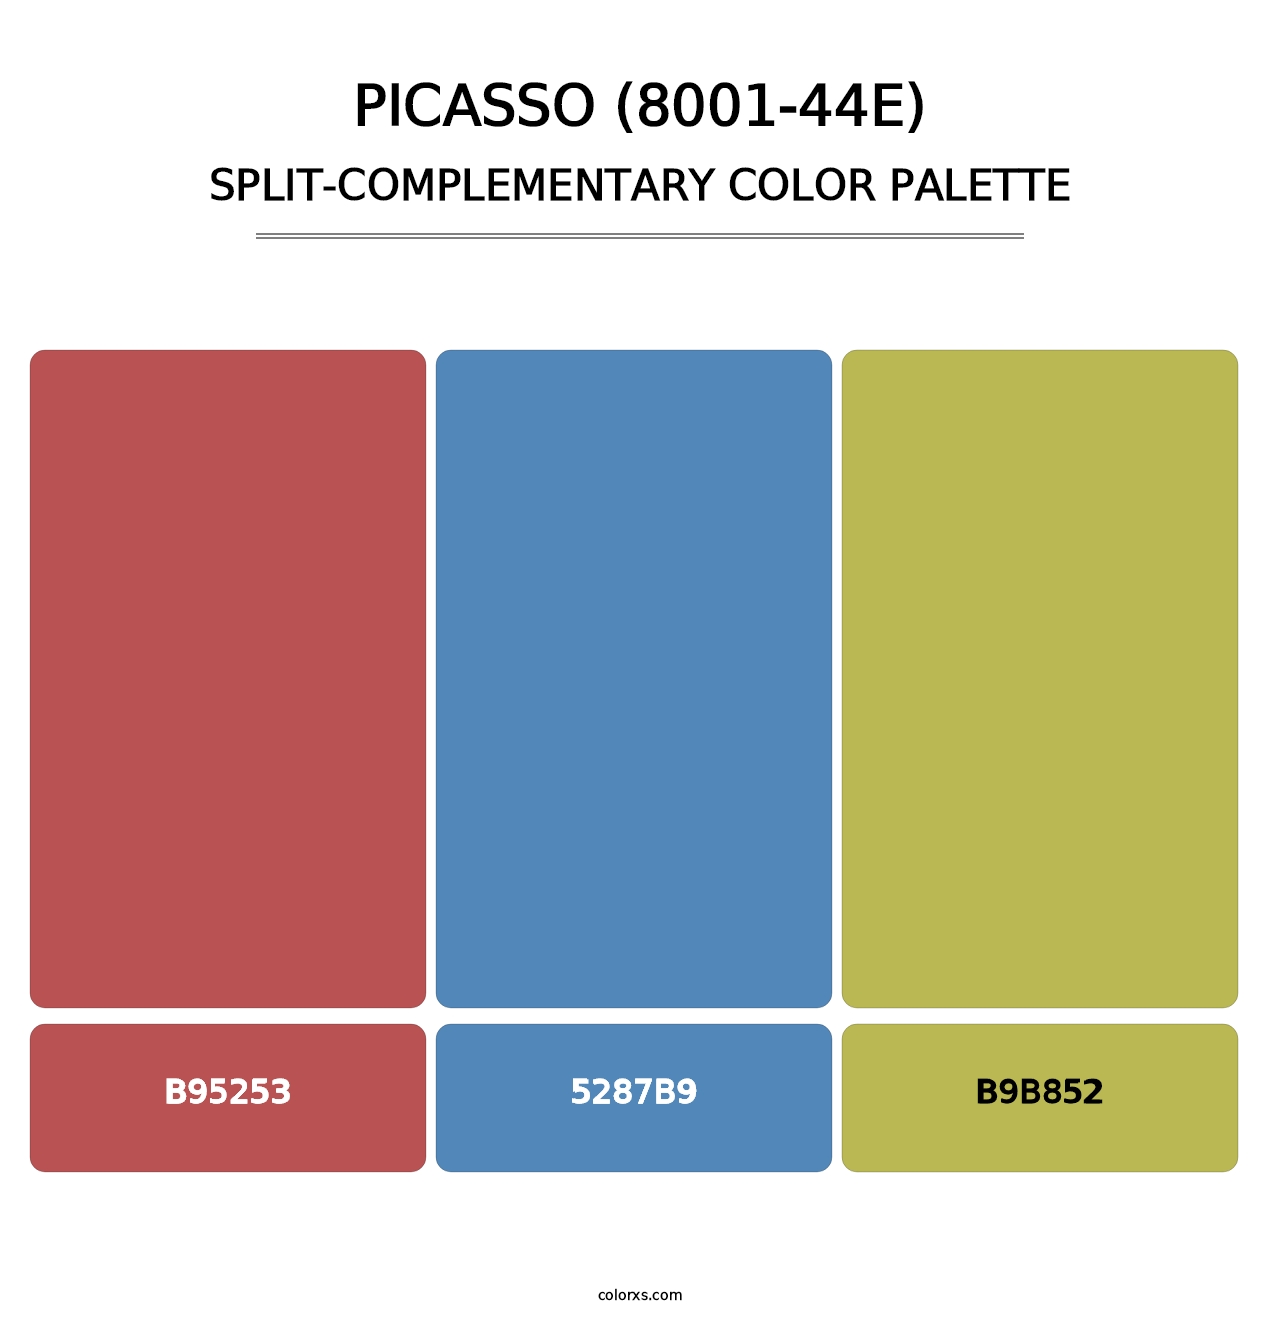 Picasso (8001-44E) - Split-Complementary Color Palette